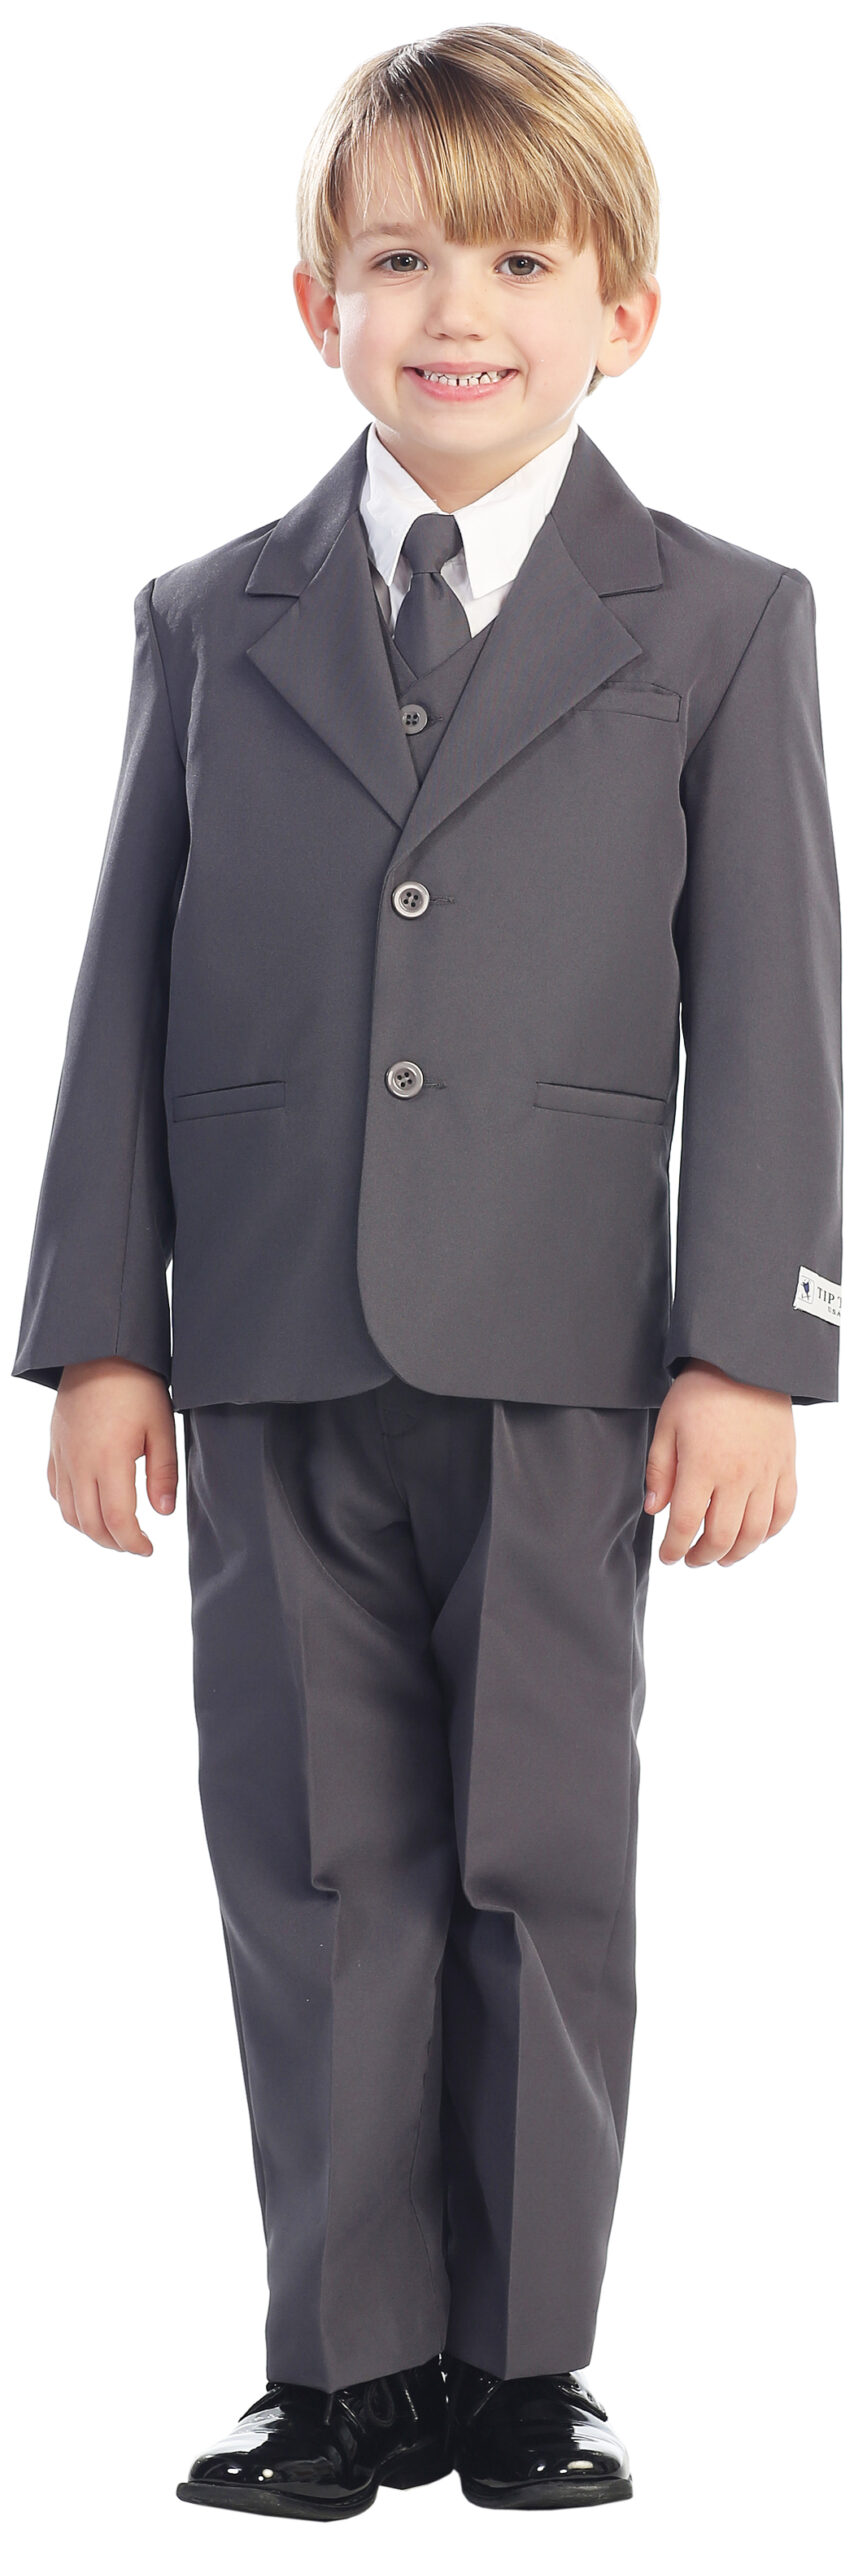 Avery Hill 5-Piece Boy's 2-Button Dress Suit Full-Back Vest - Charcoal Grey Size 4T